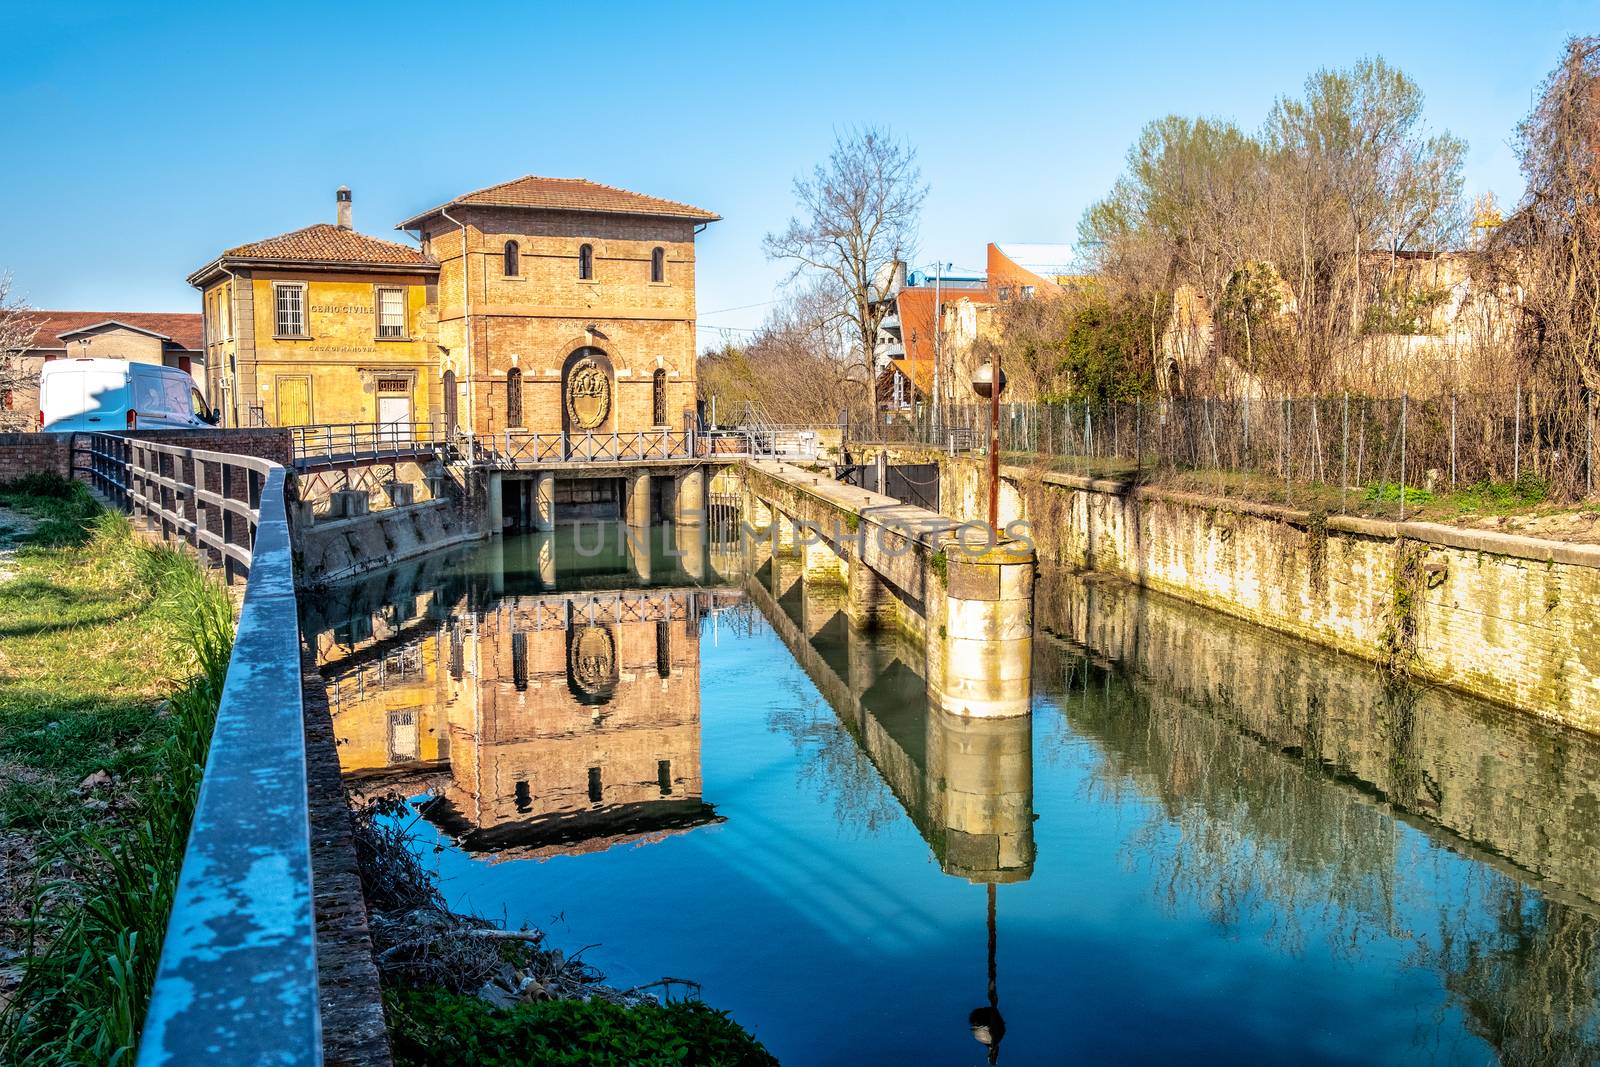 Bologna Battiferro Navile canal river lock - an historic landmark of the italian city .